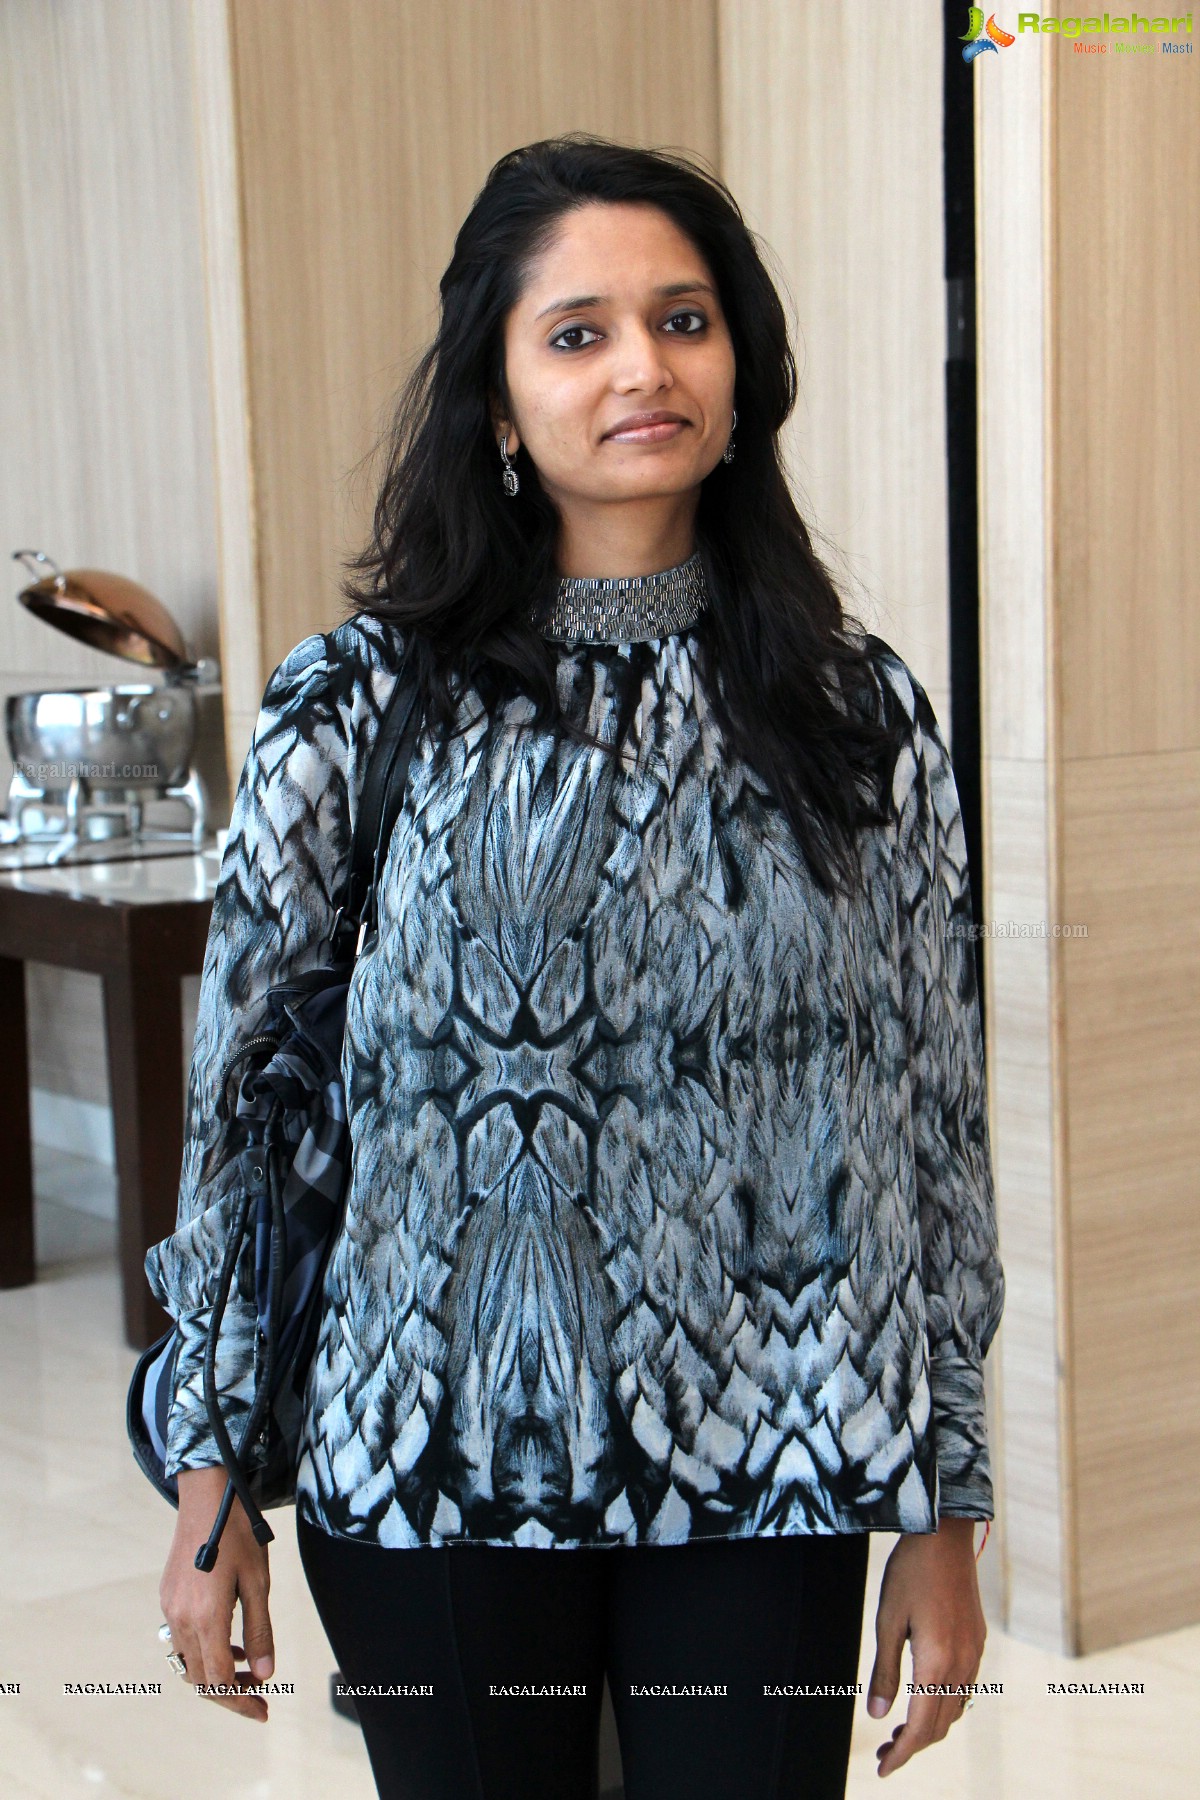 YFLO Interaction with Nidhi Swarup at Hotel Trident, Madhapur, Hyderabad